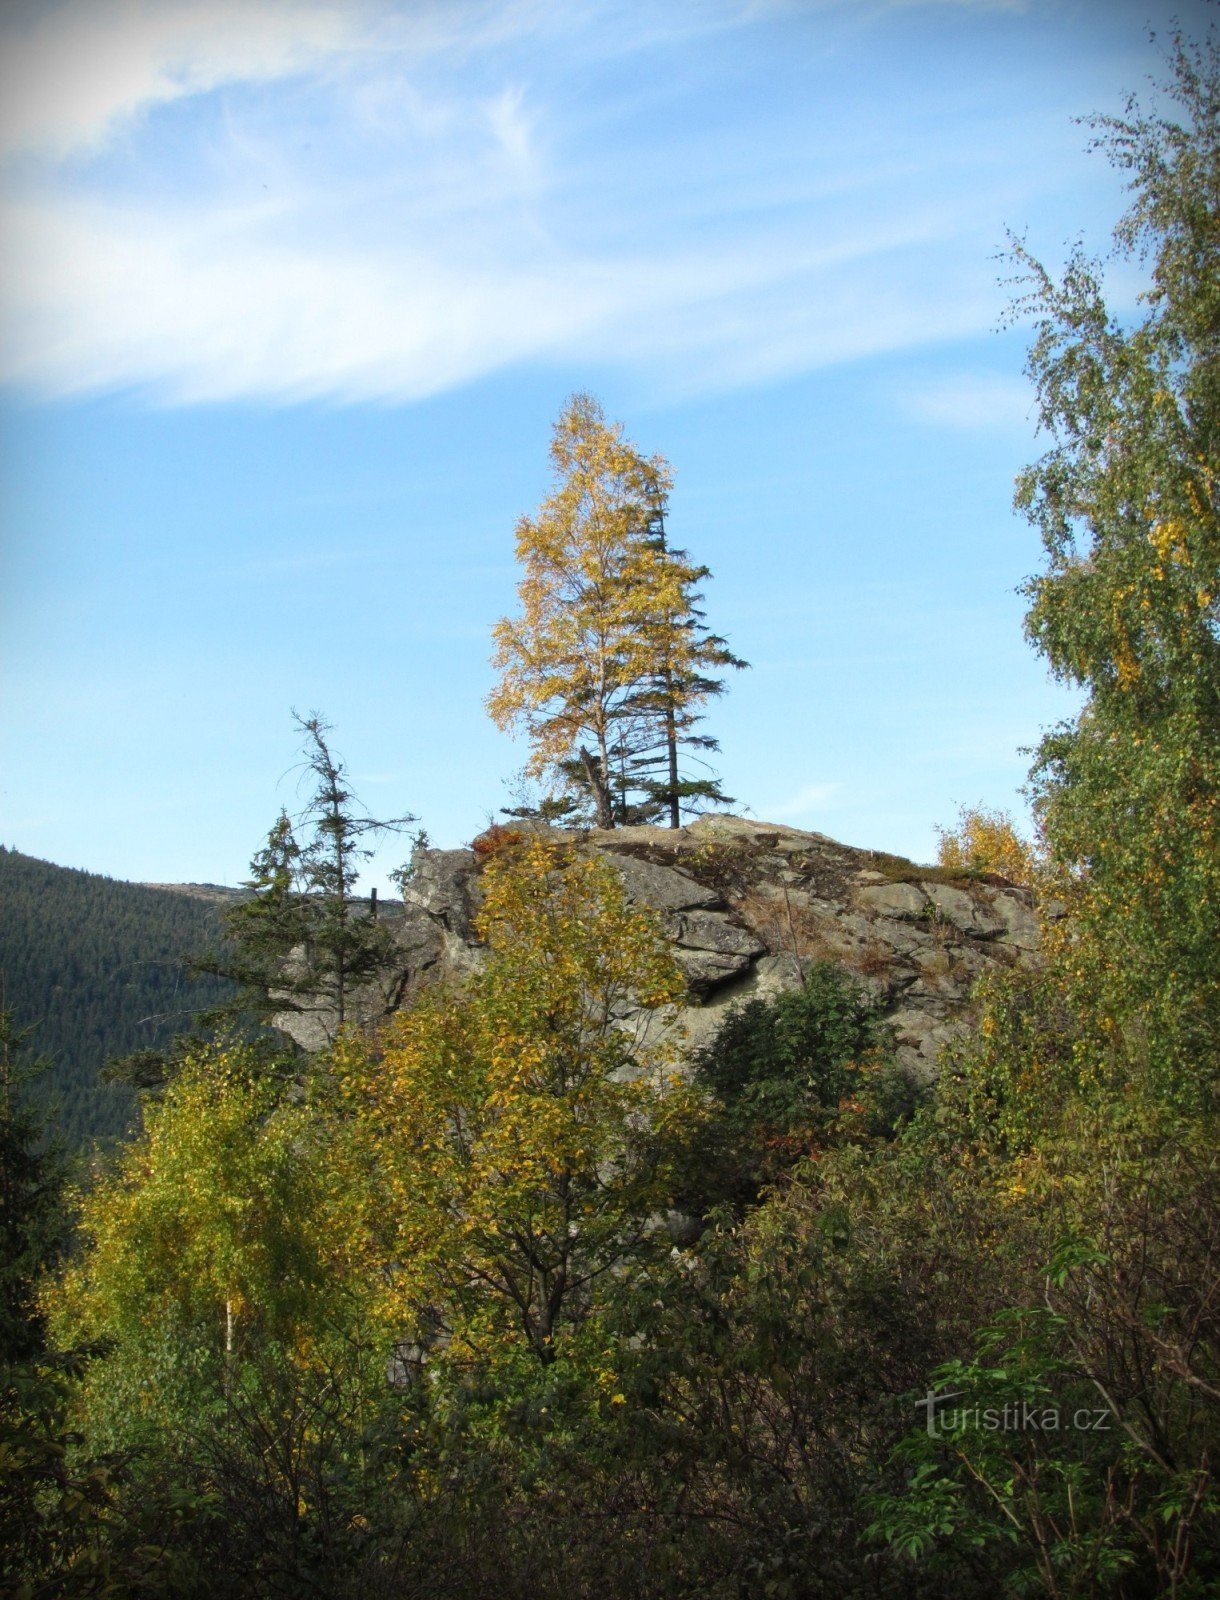 Roca Kamzičí sobre el valle de Bílé potok - Montañas Jeseníky